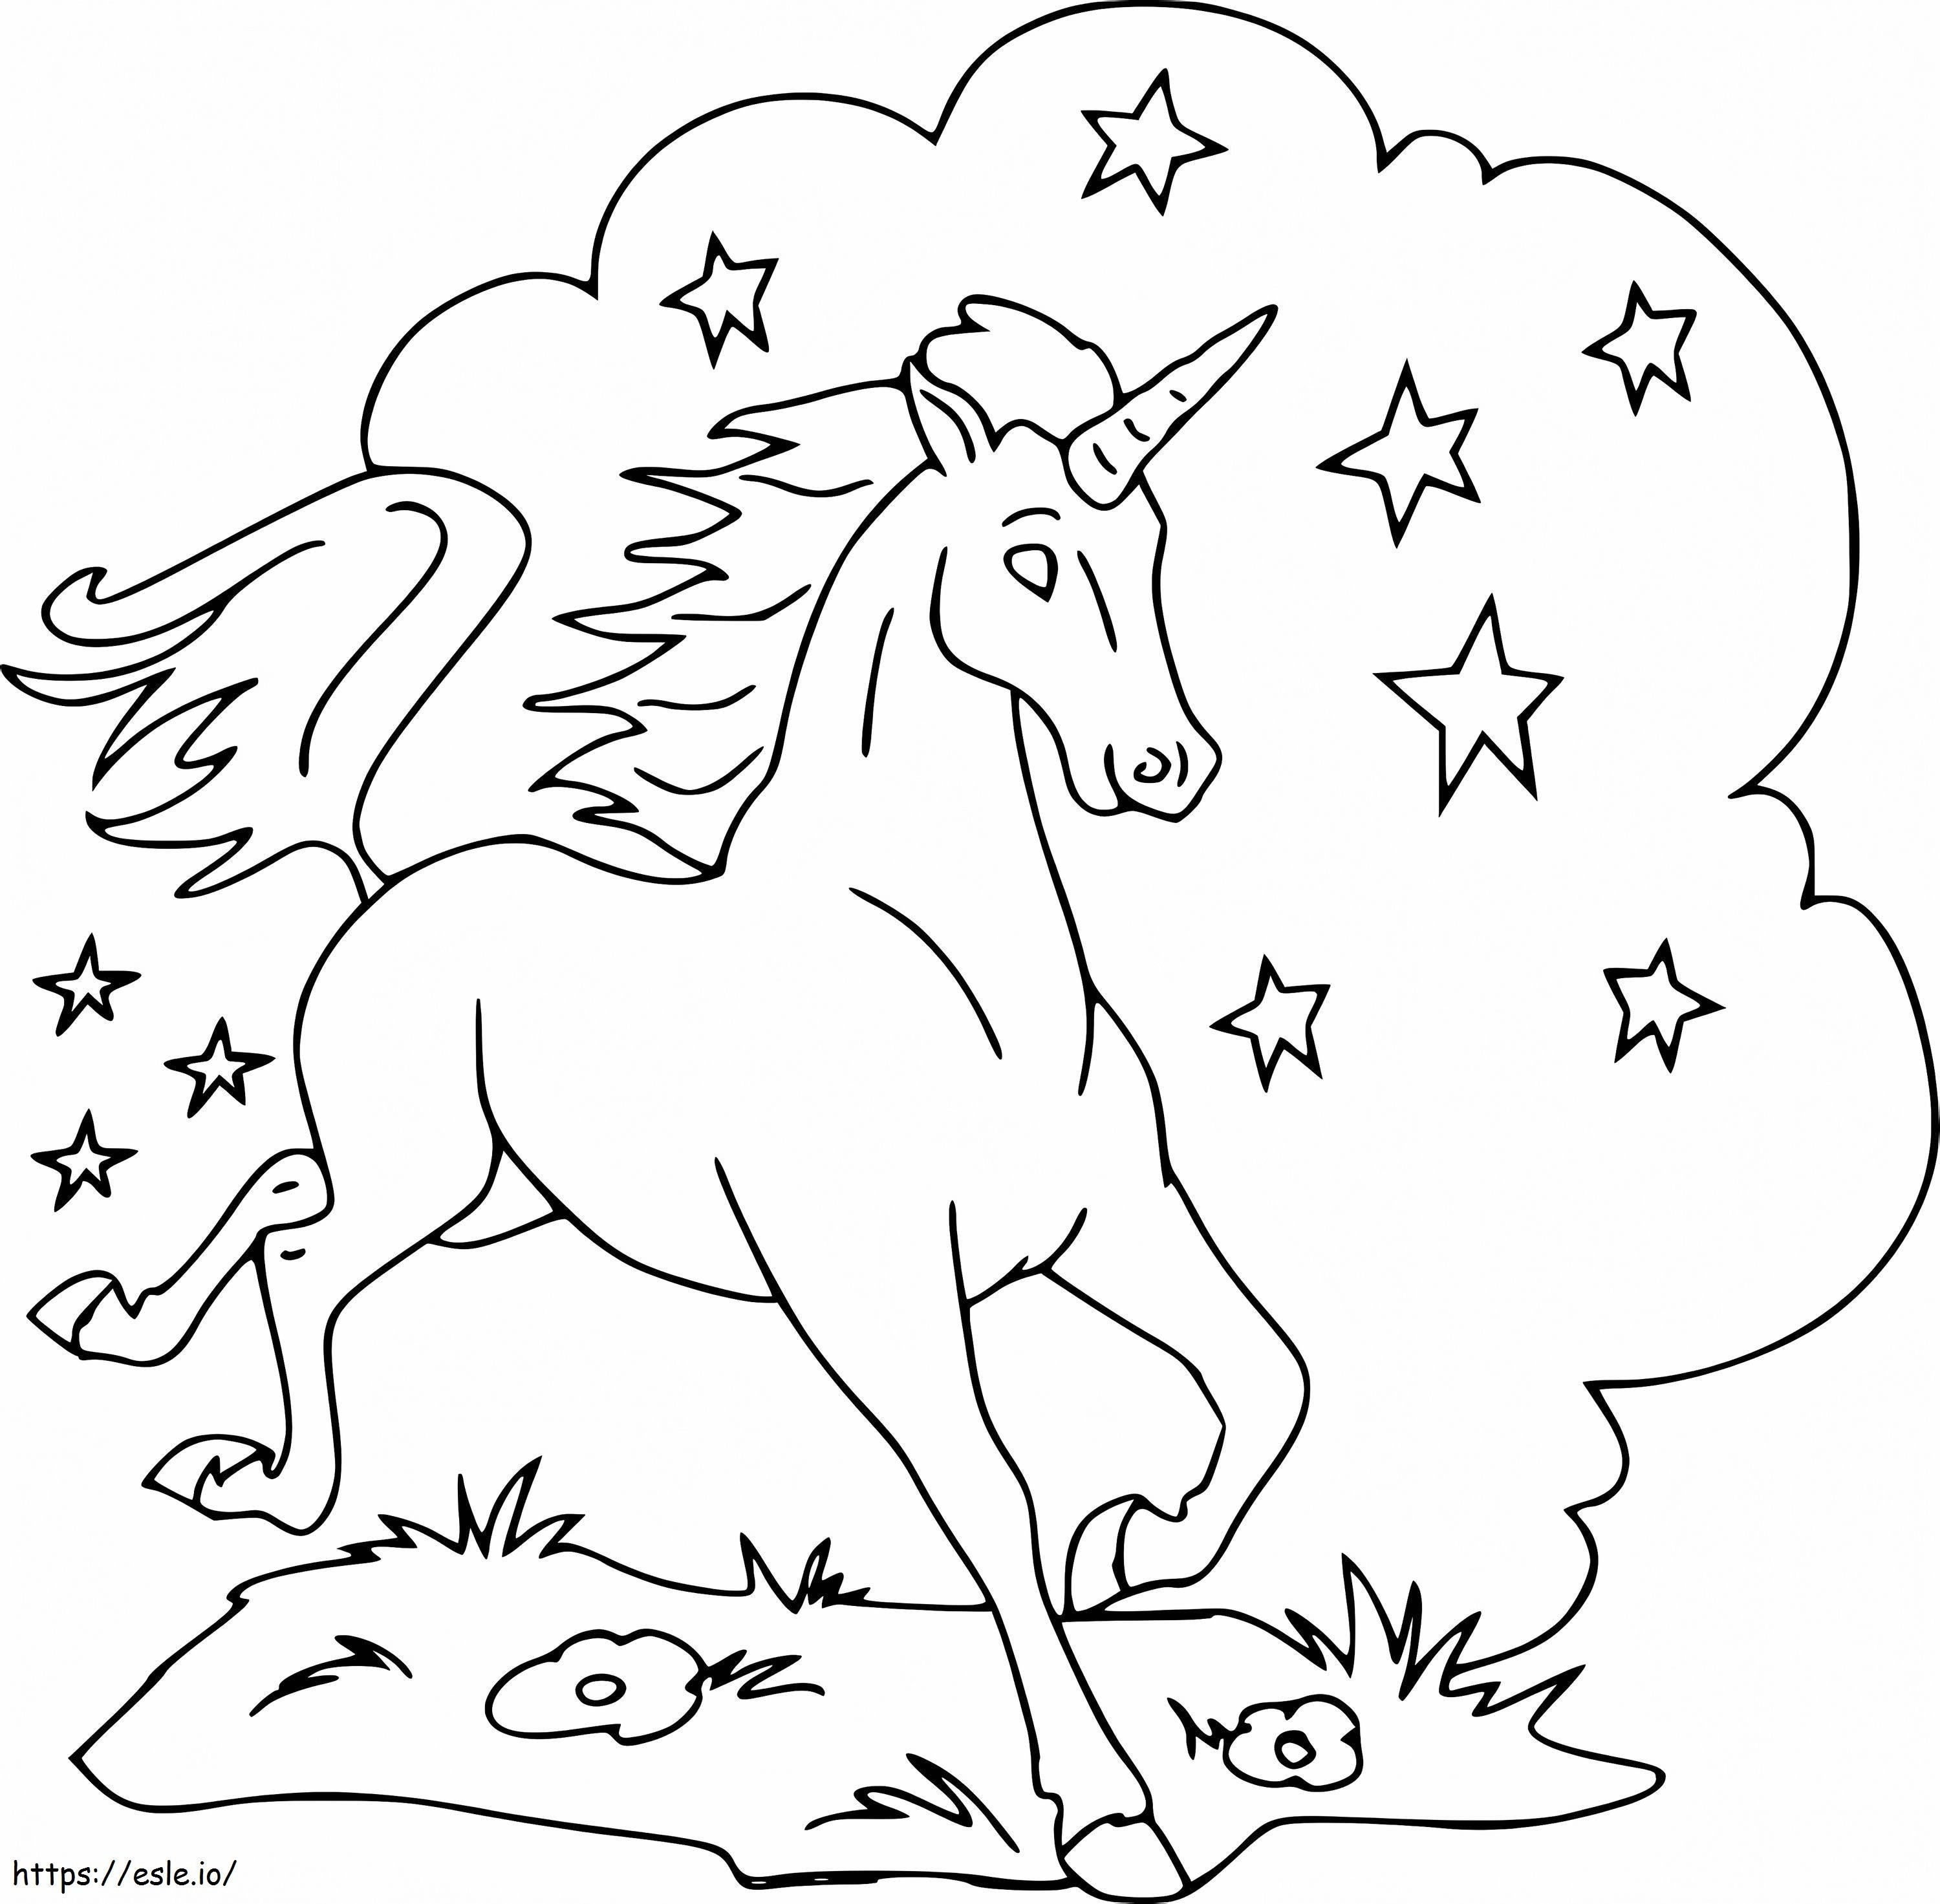 1563756494 Unicornio Con Estrella A4 para colorear